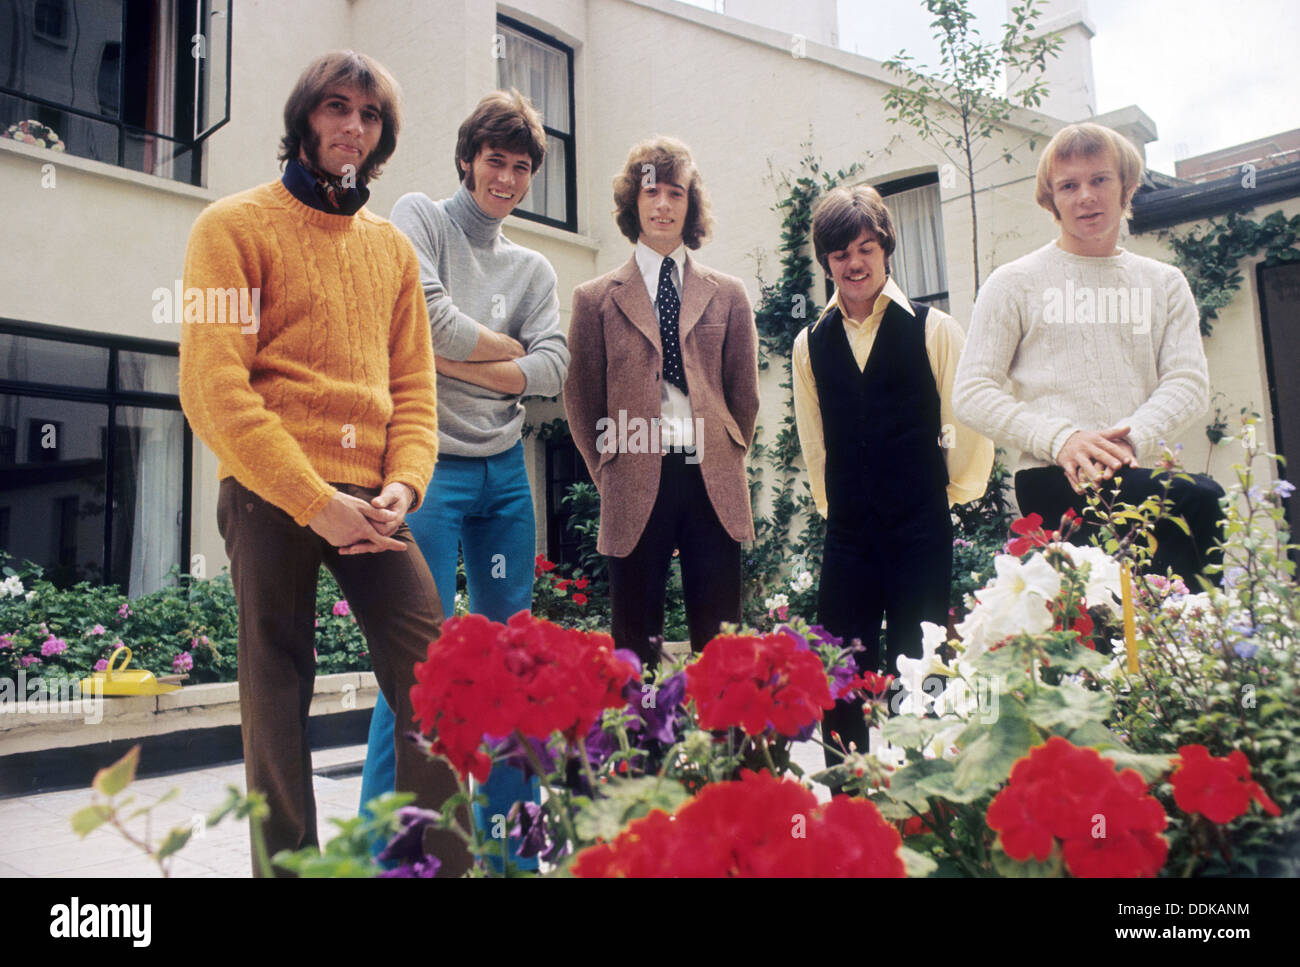 BEE GEES groupe pop en 1967 de l : Maurice Gibb, Barry Gibb, Robin Gibb, Vince Melouney, Colin Petersen. Photo Tony Gale Banque D'Images